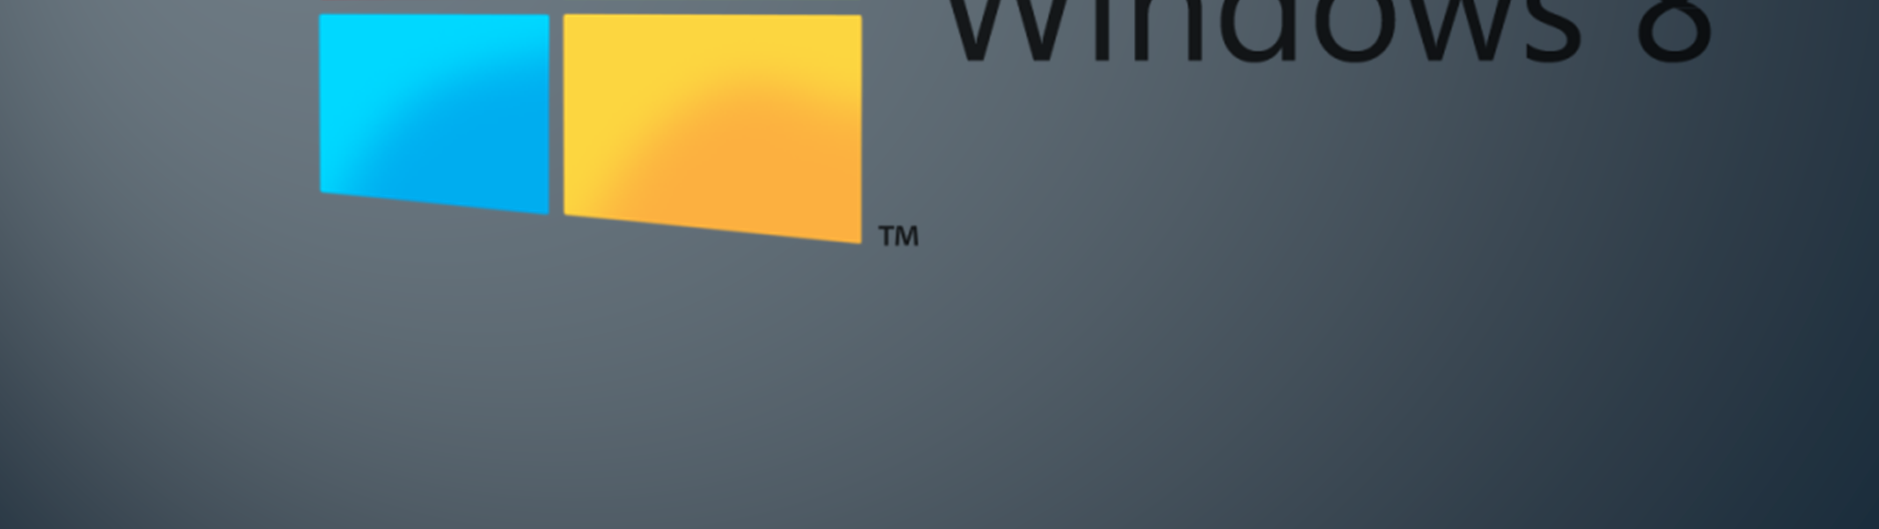 Windows 8 Um